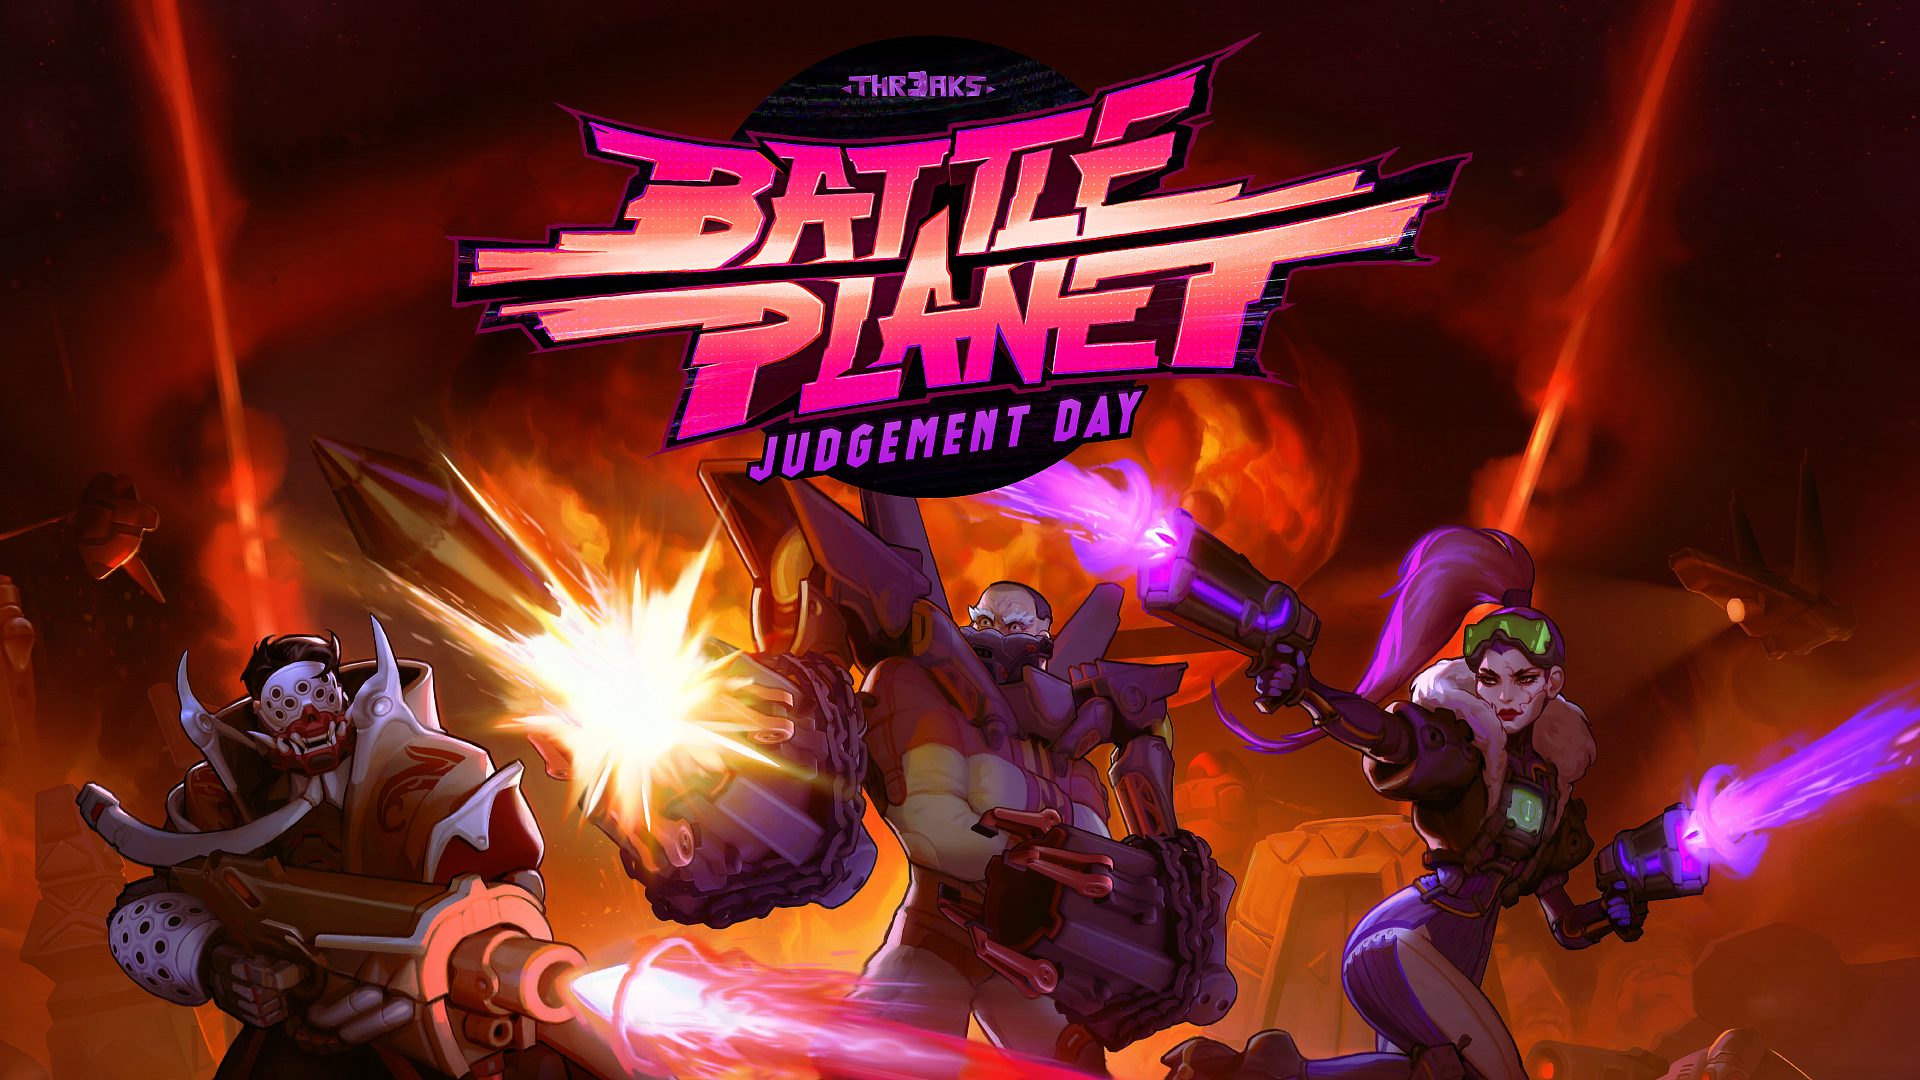 Battle Planet - Judgement Day download the last version for windows